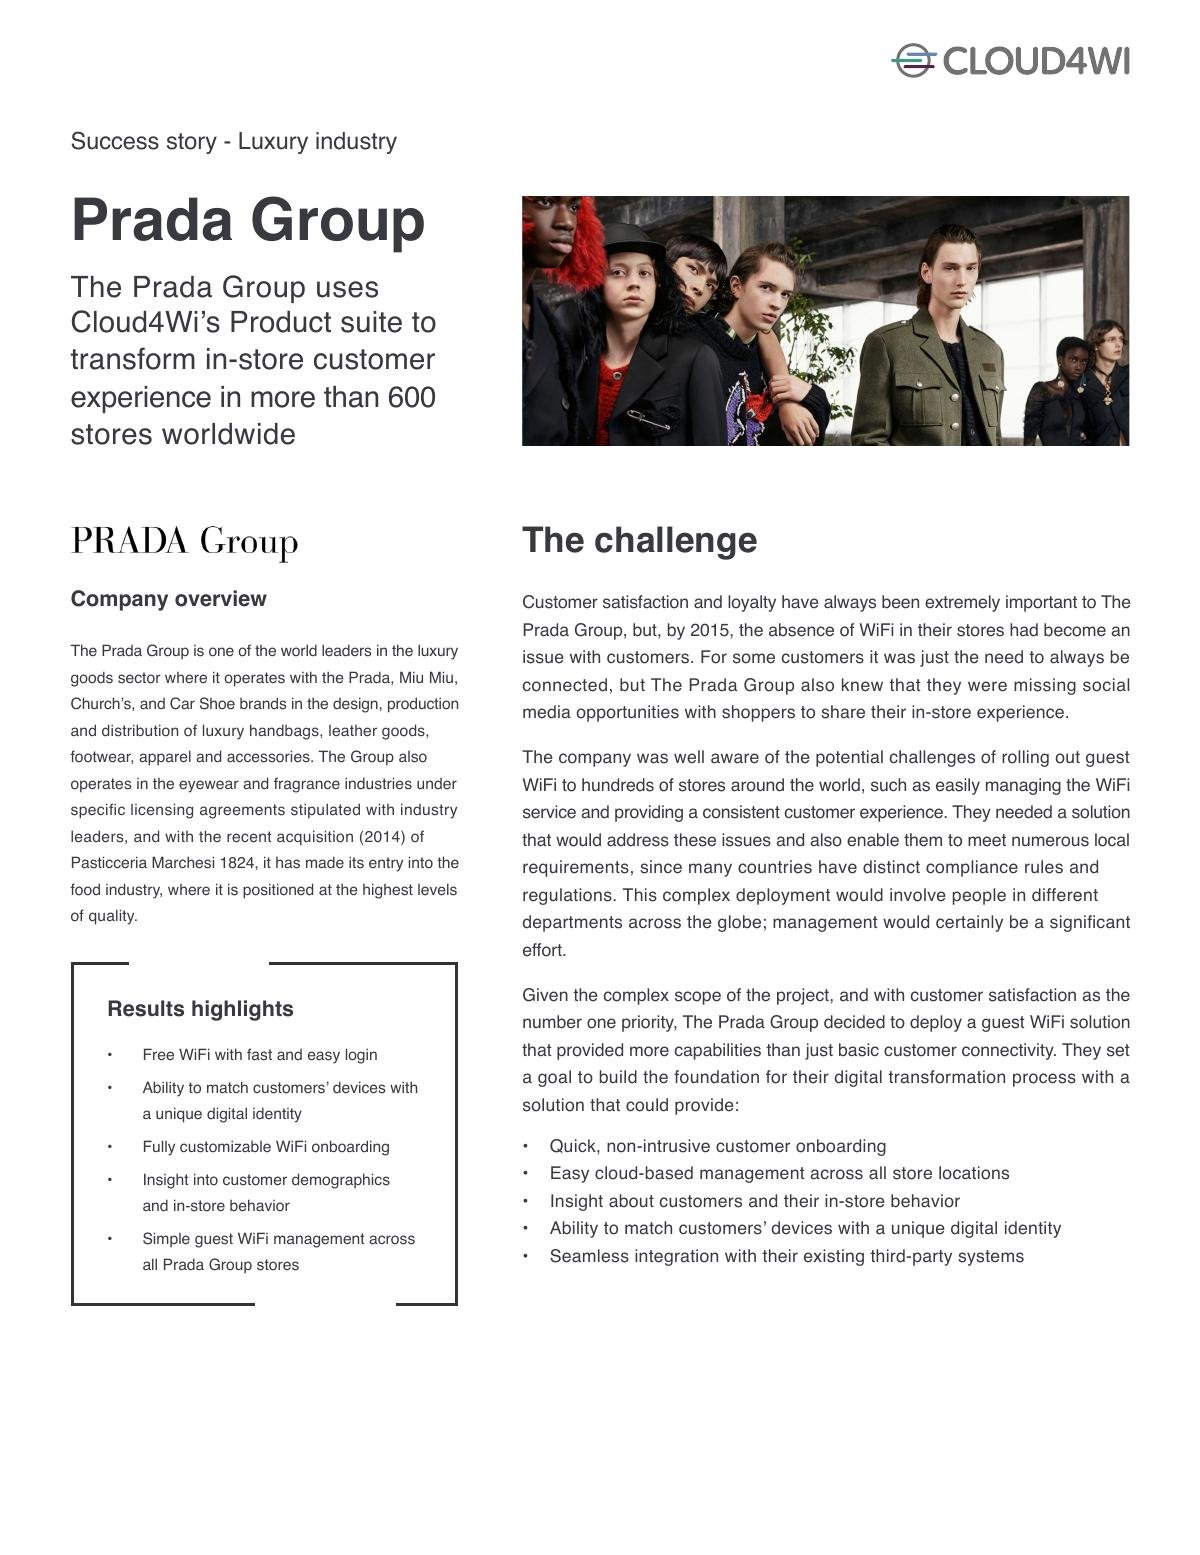 Prada Group Success Story